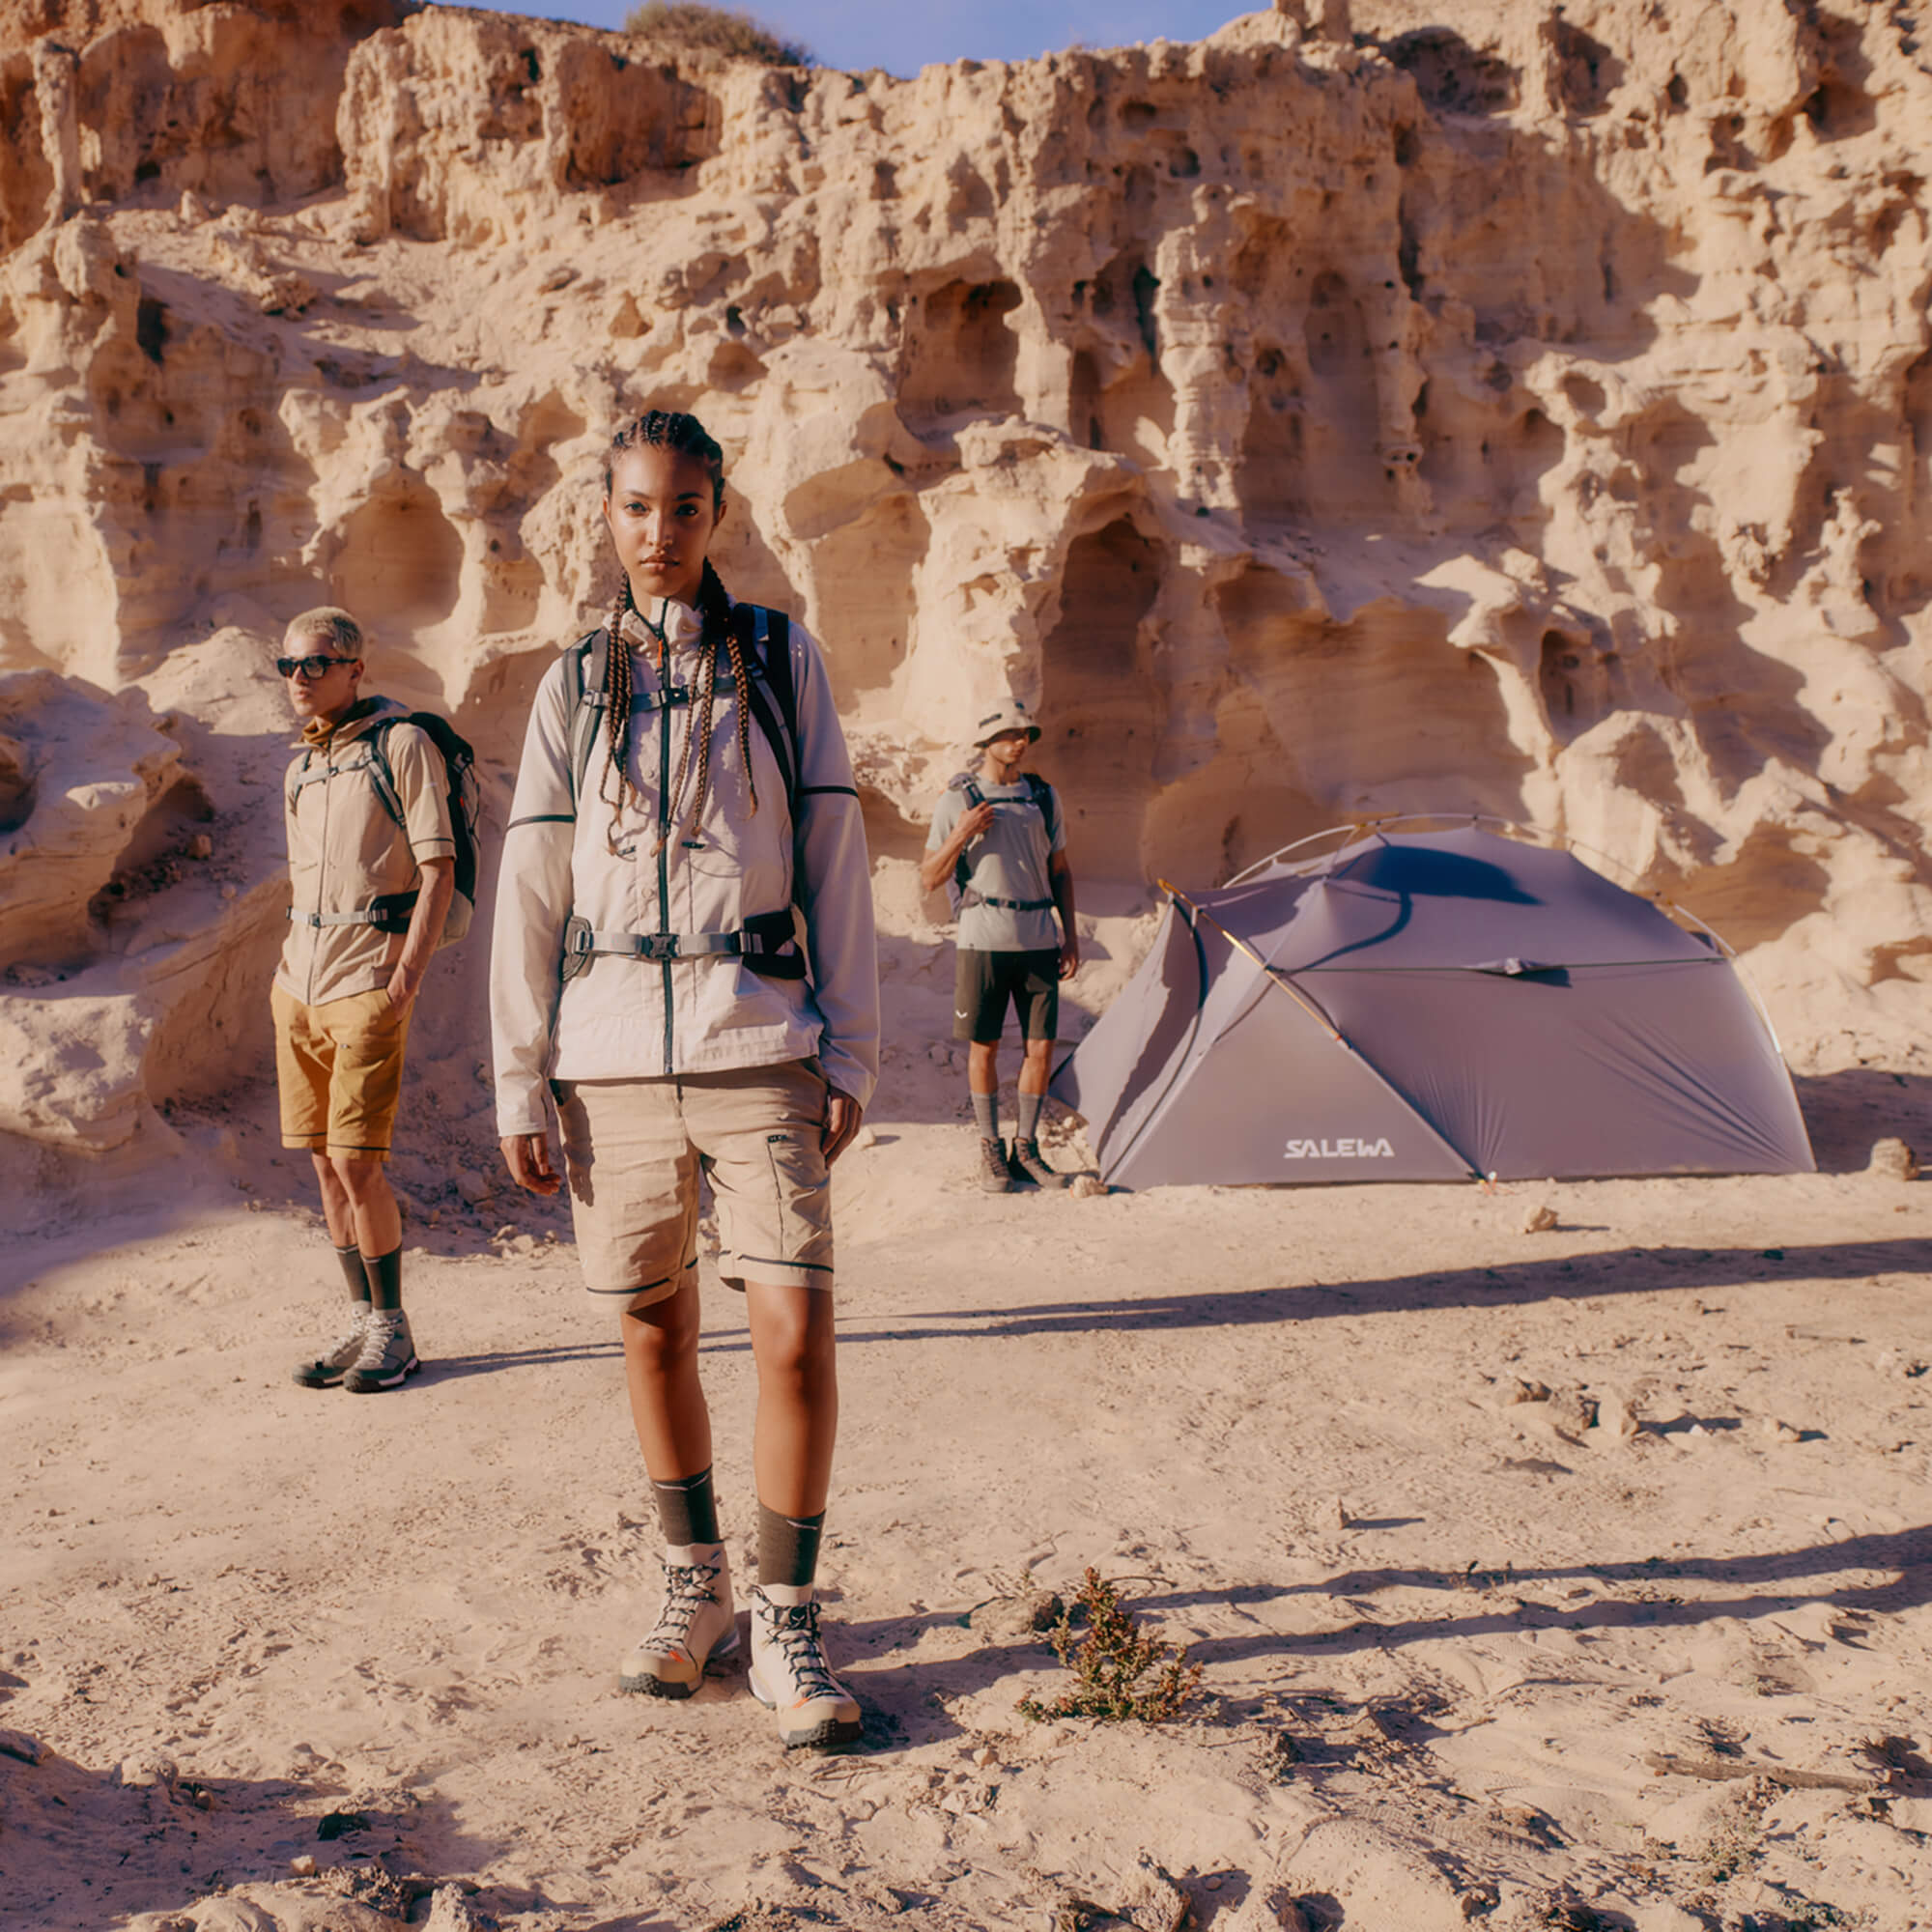 Salewa Puez Trek 2P Lightweight Backpacking Tent + Footprint